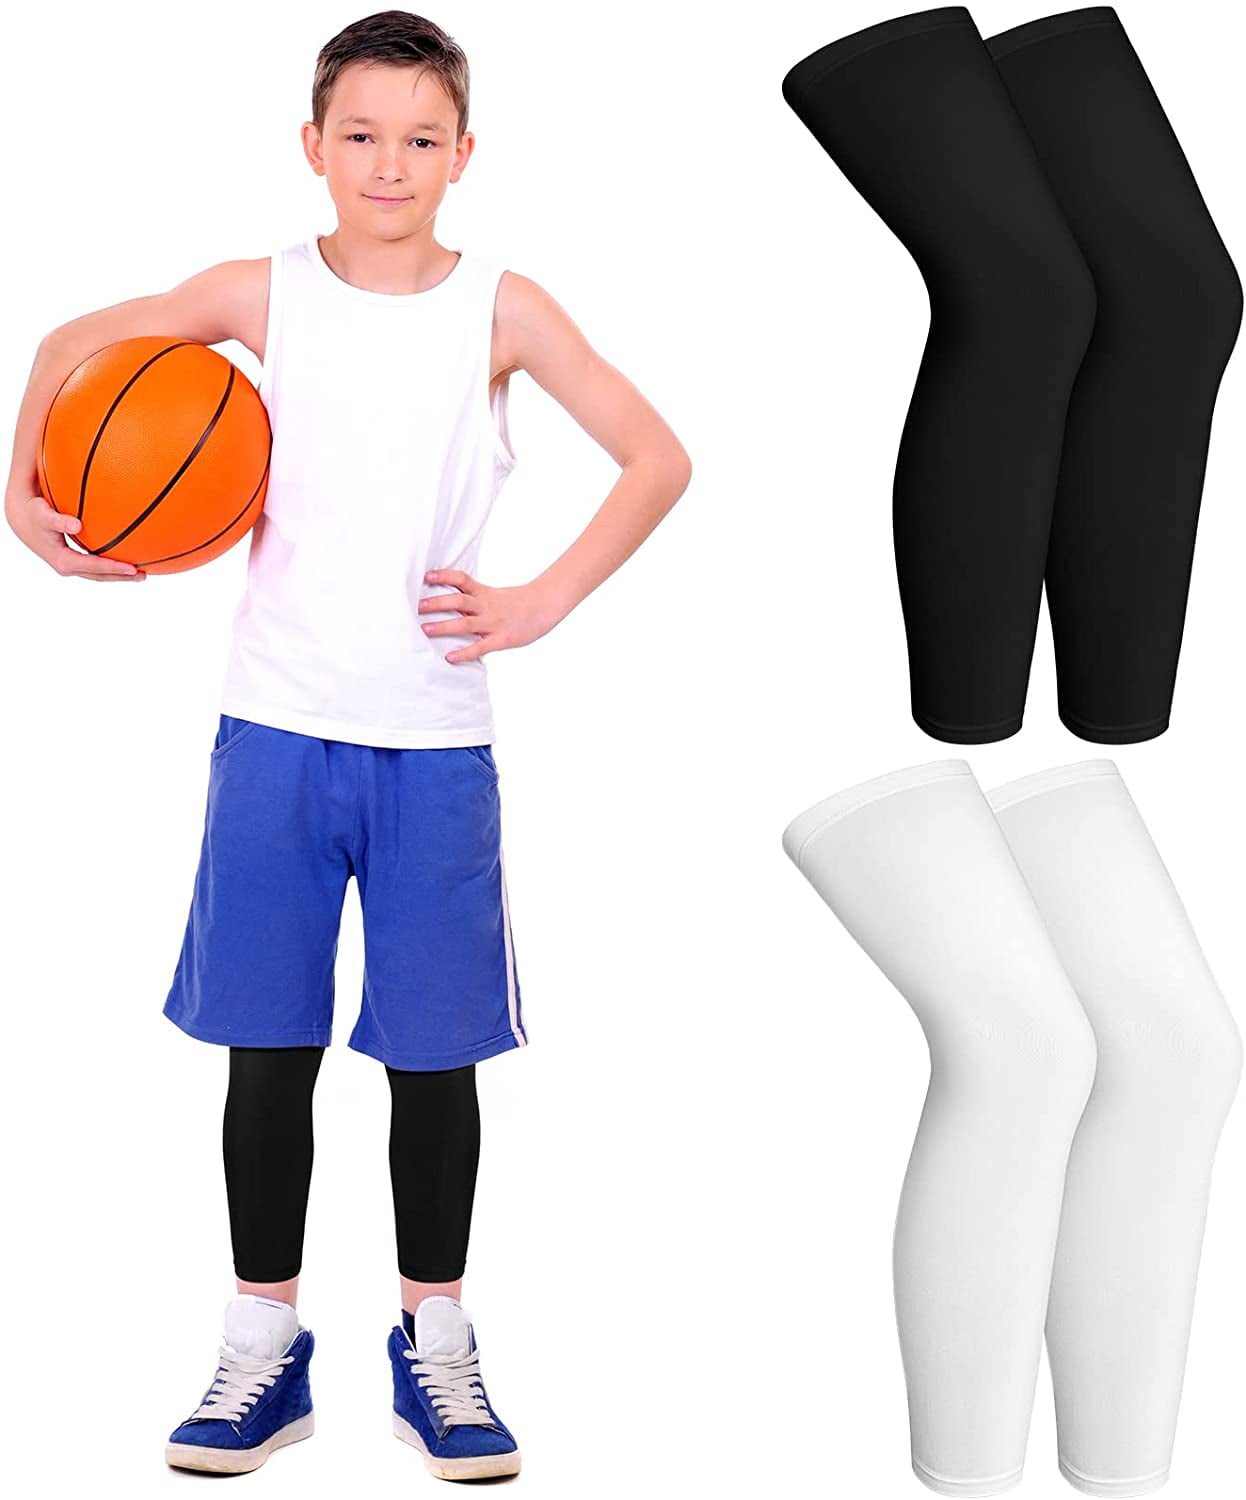 1 Pair Compression Leg Sleeves Outdoor Basketball Full Length Leg